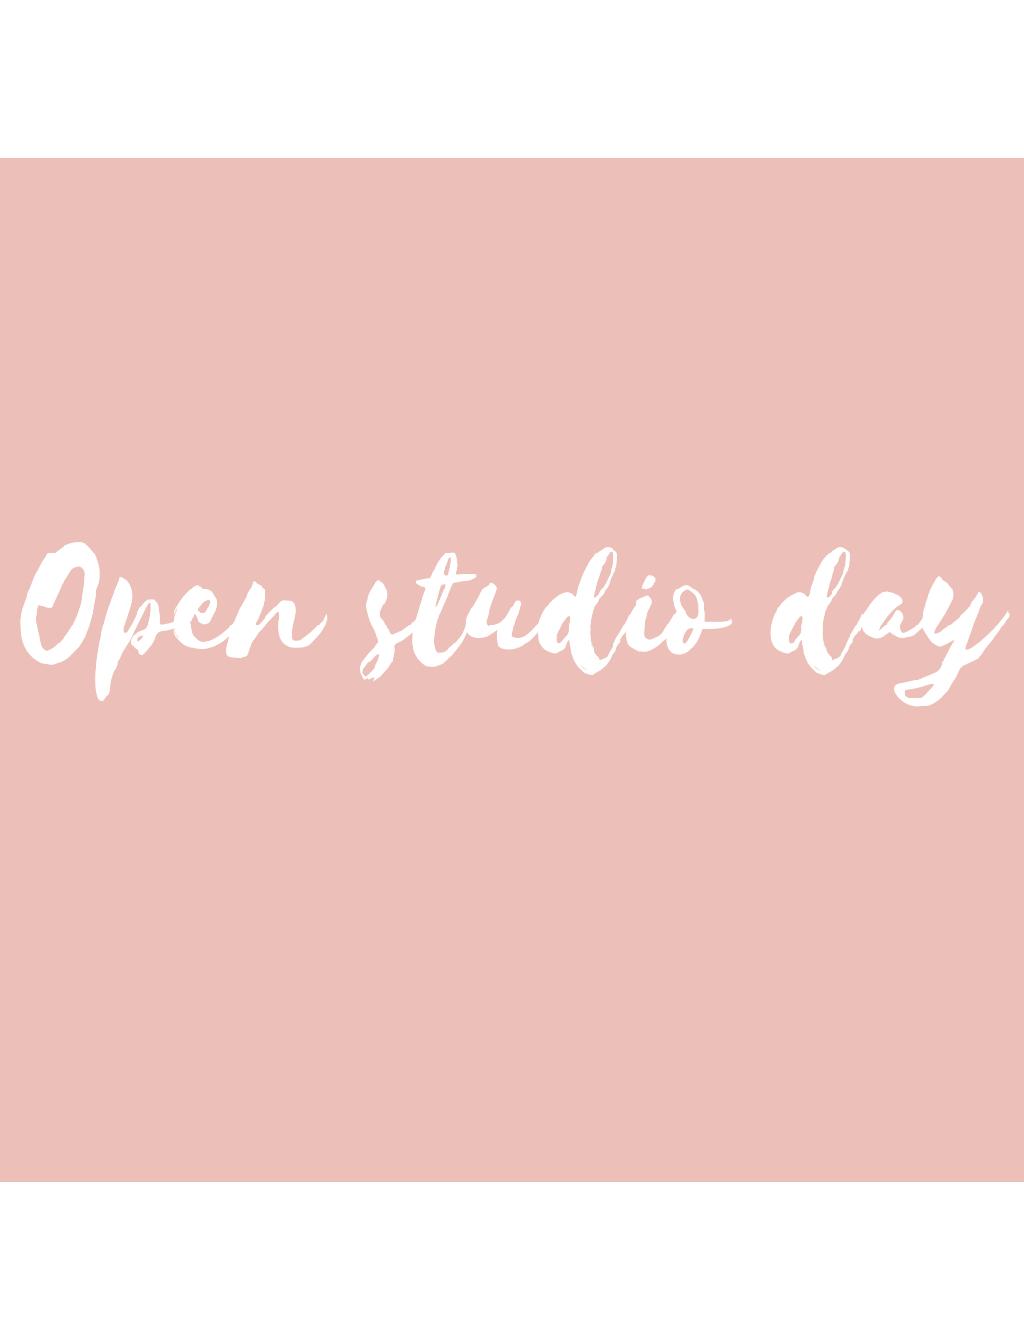 Open studio day 10:00am-10:30